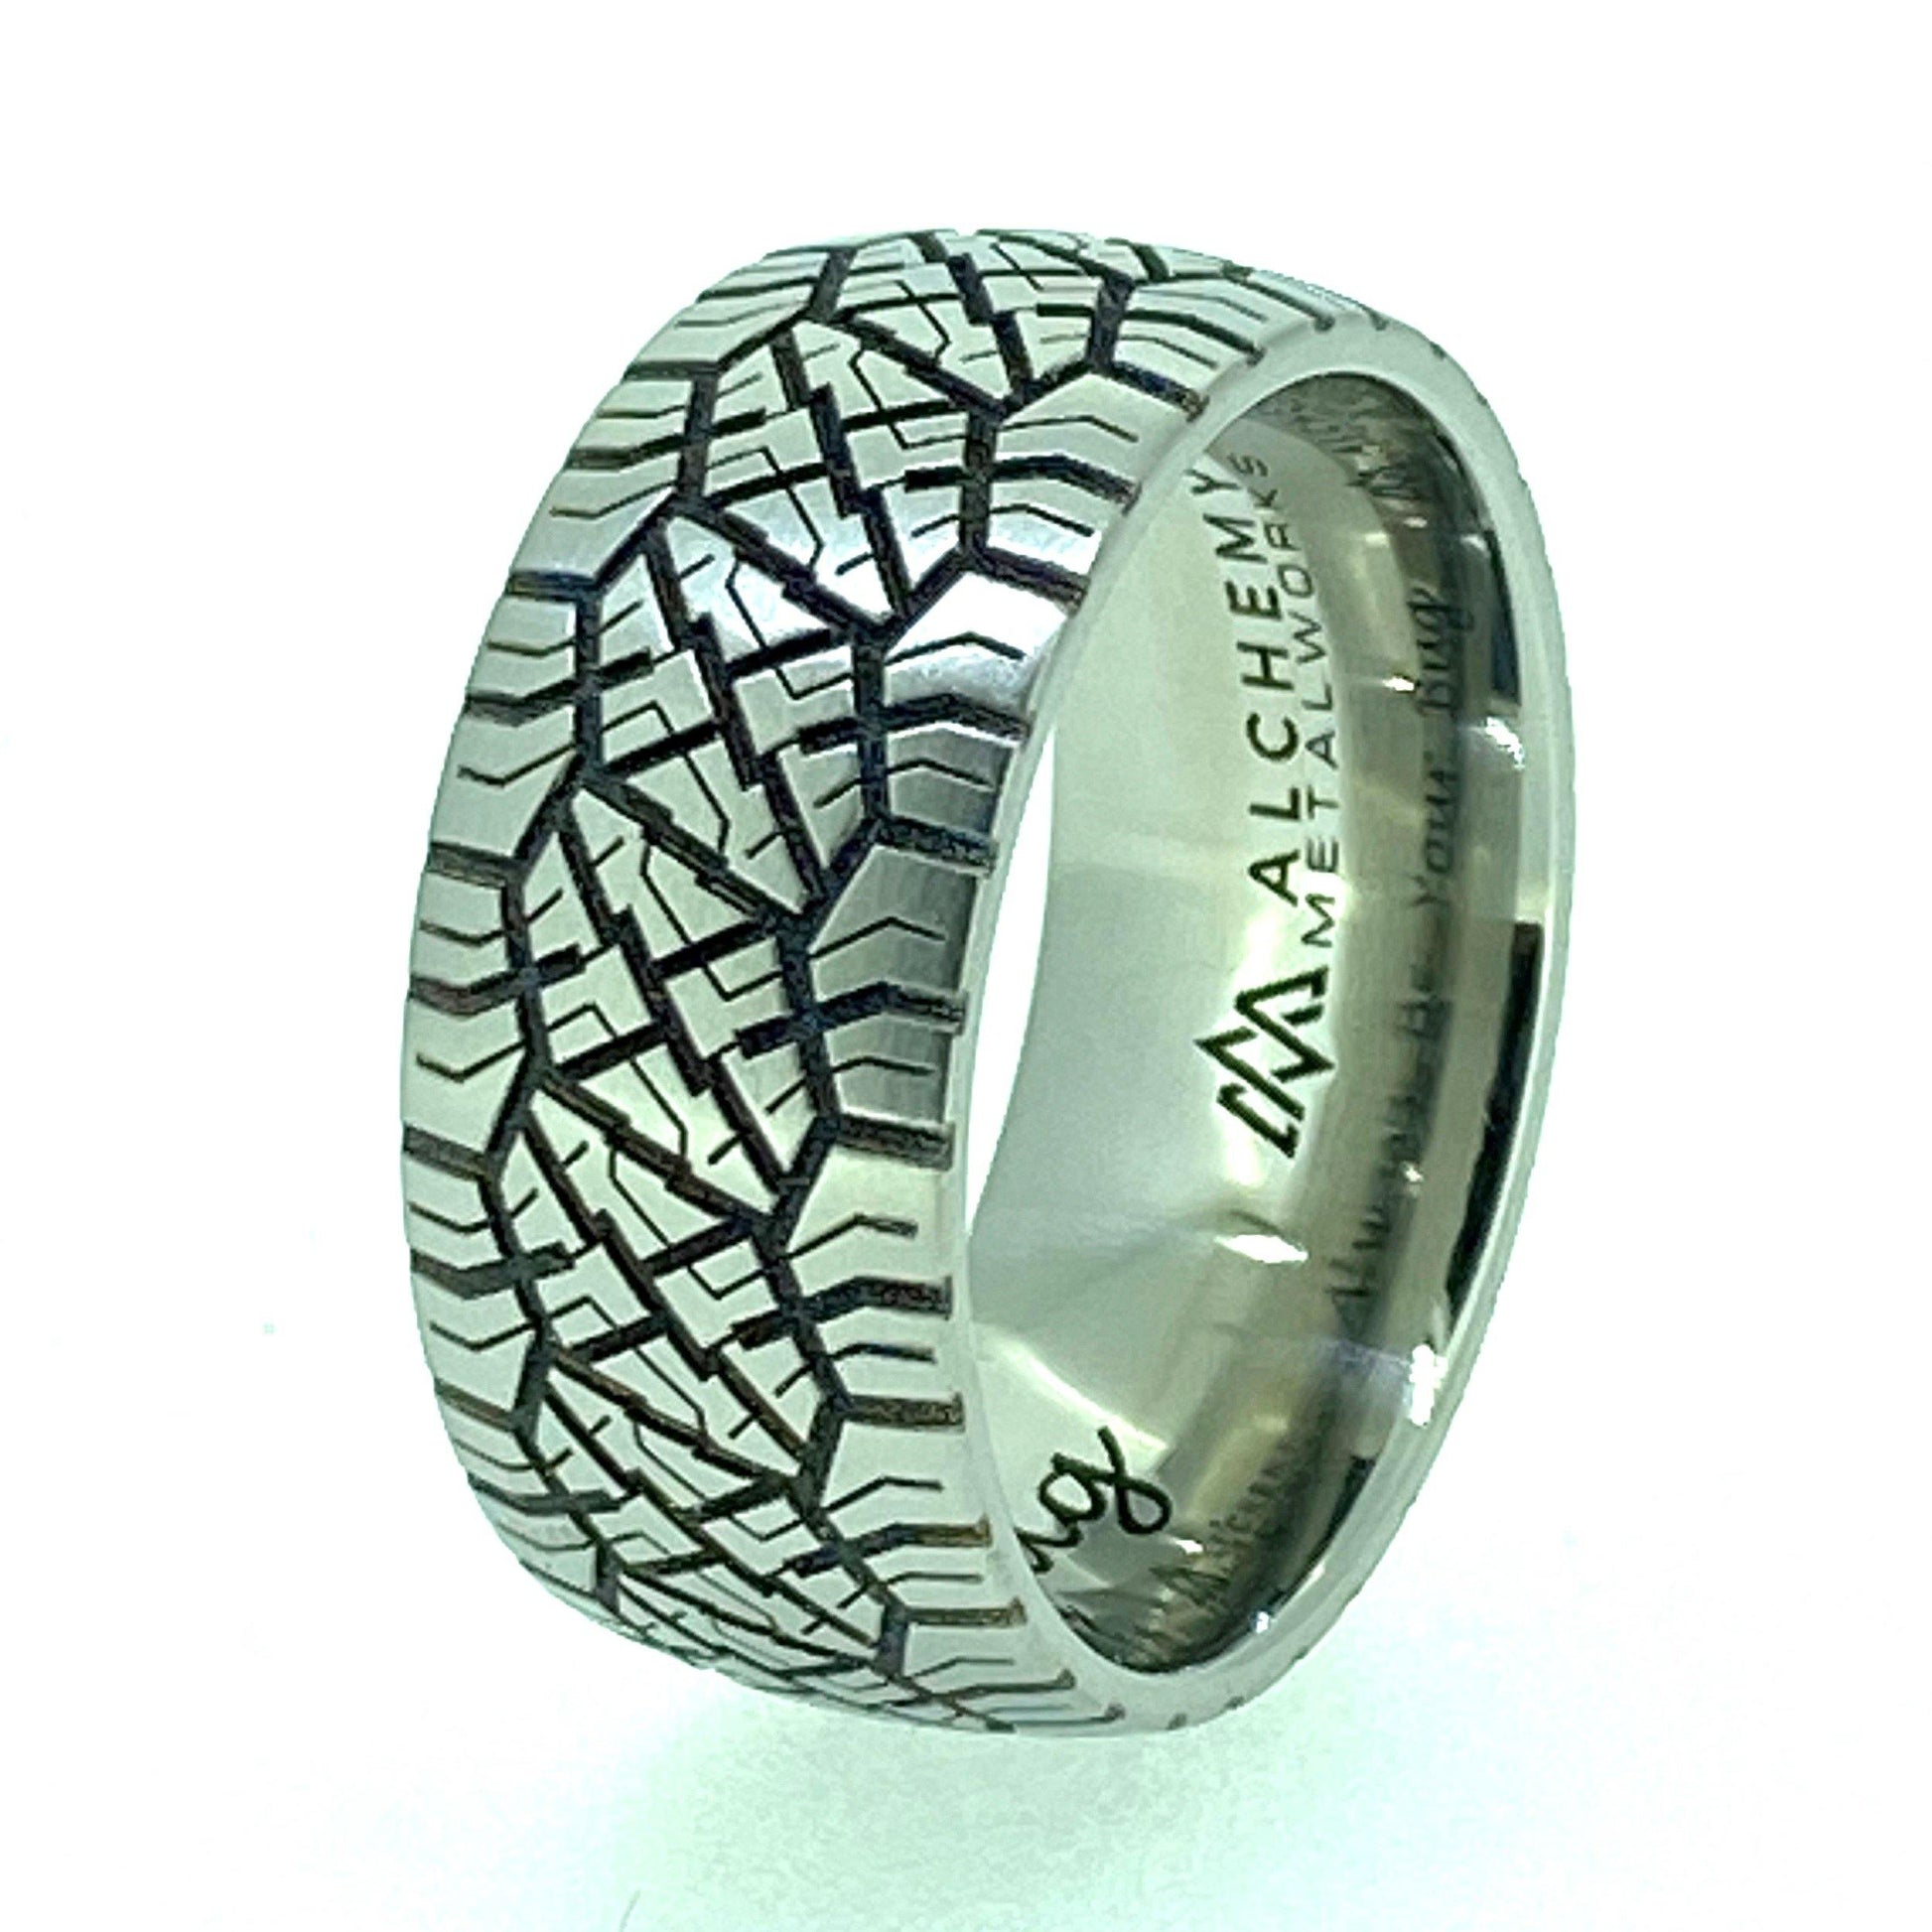 Custom Engraved Titanium Ring - Alchemy Metalworks 